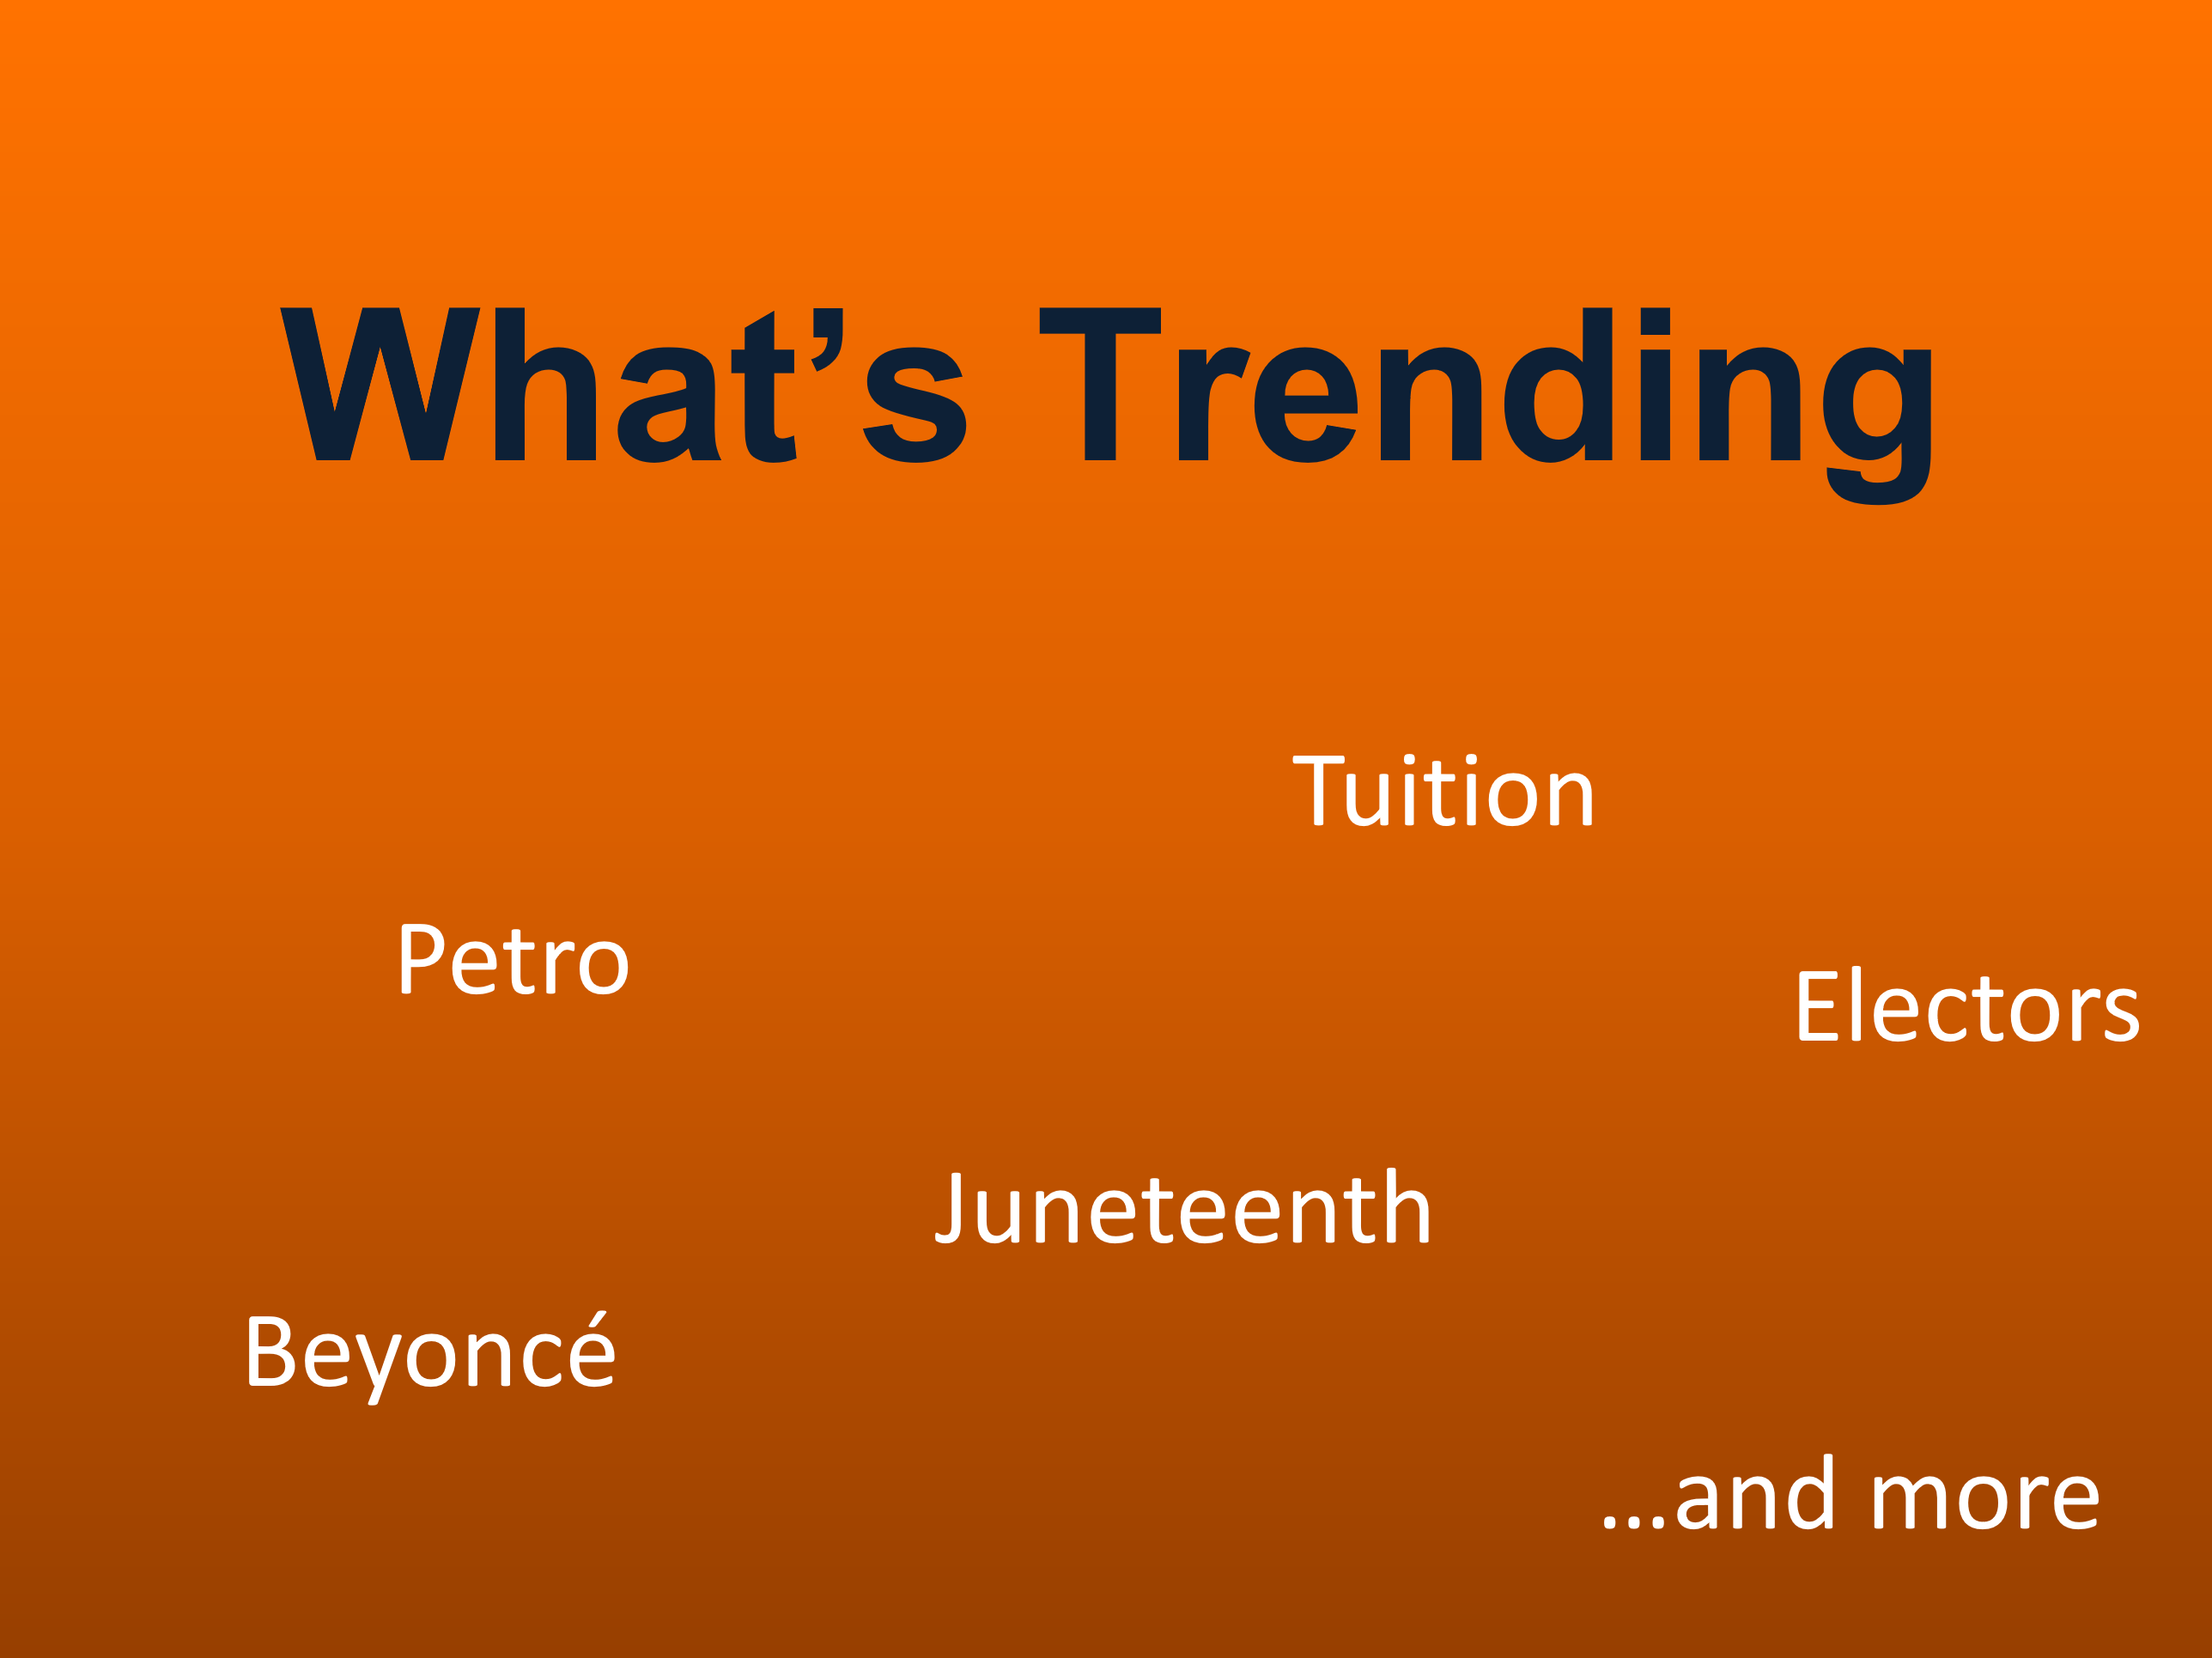 6/23/22 What's trending this week?